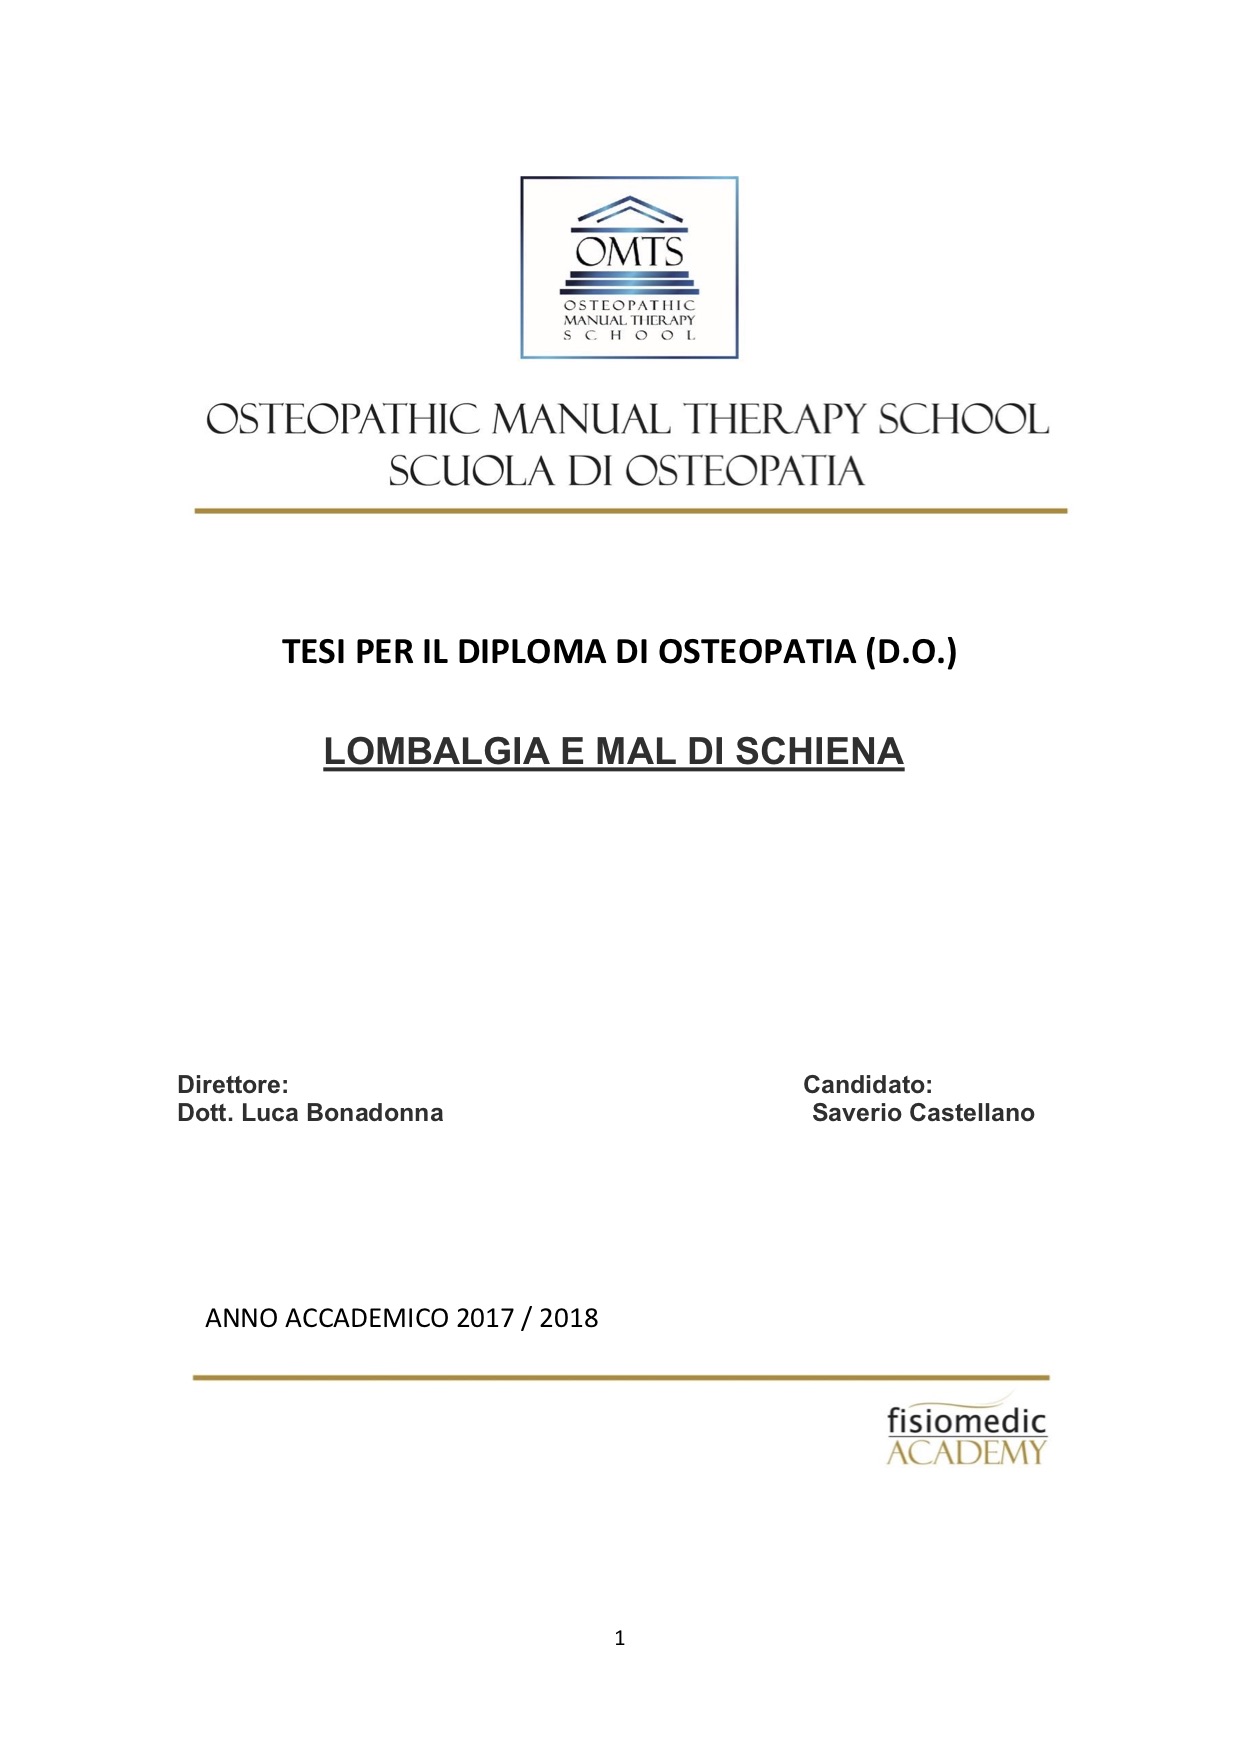 Saverio Castellano Tesi Diploma Osteopatia 2018